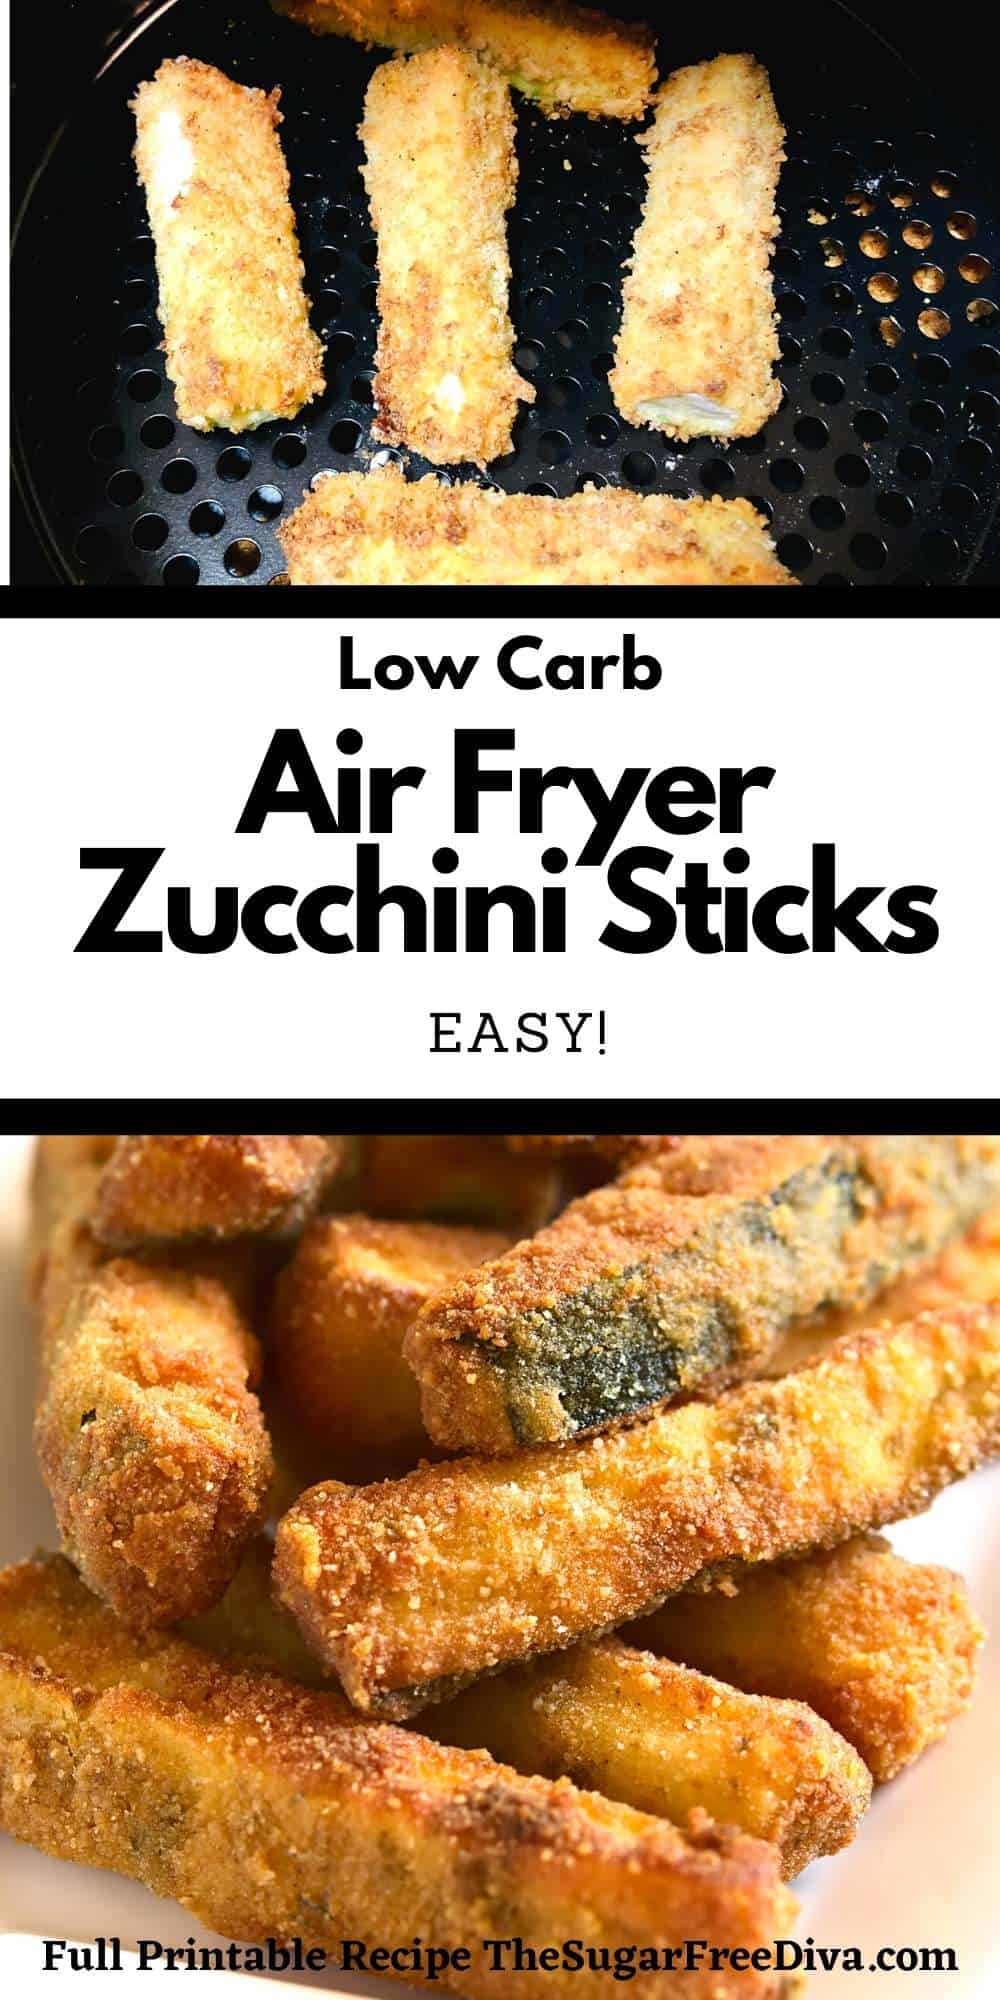 Low Carb Air Fried Zucchini Sticks